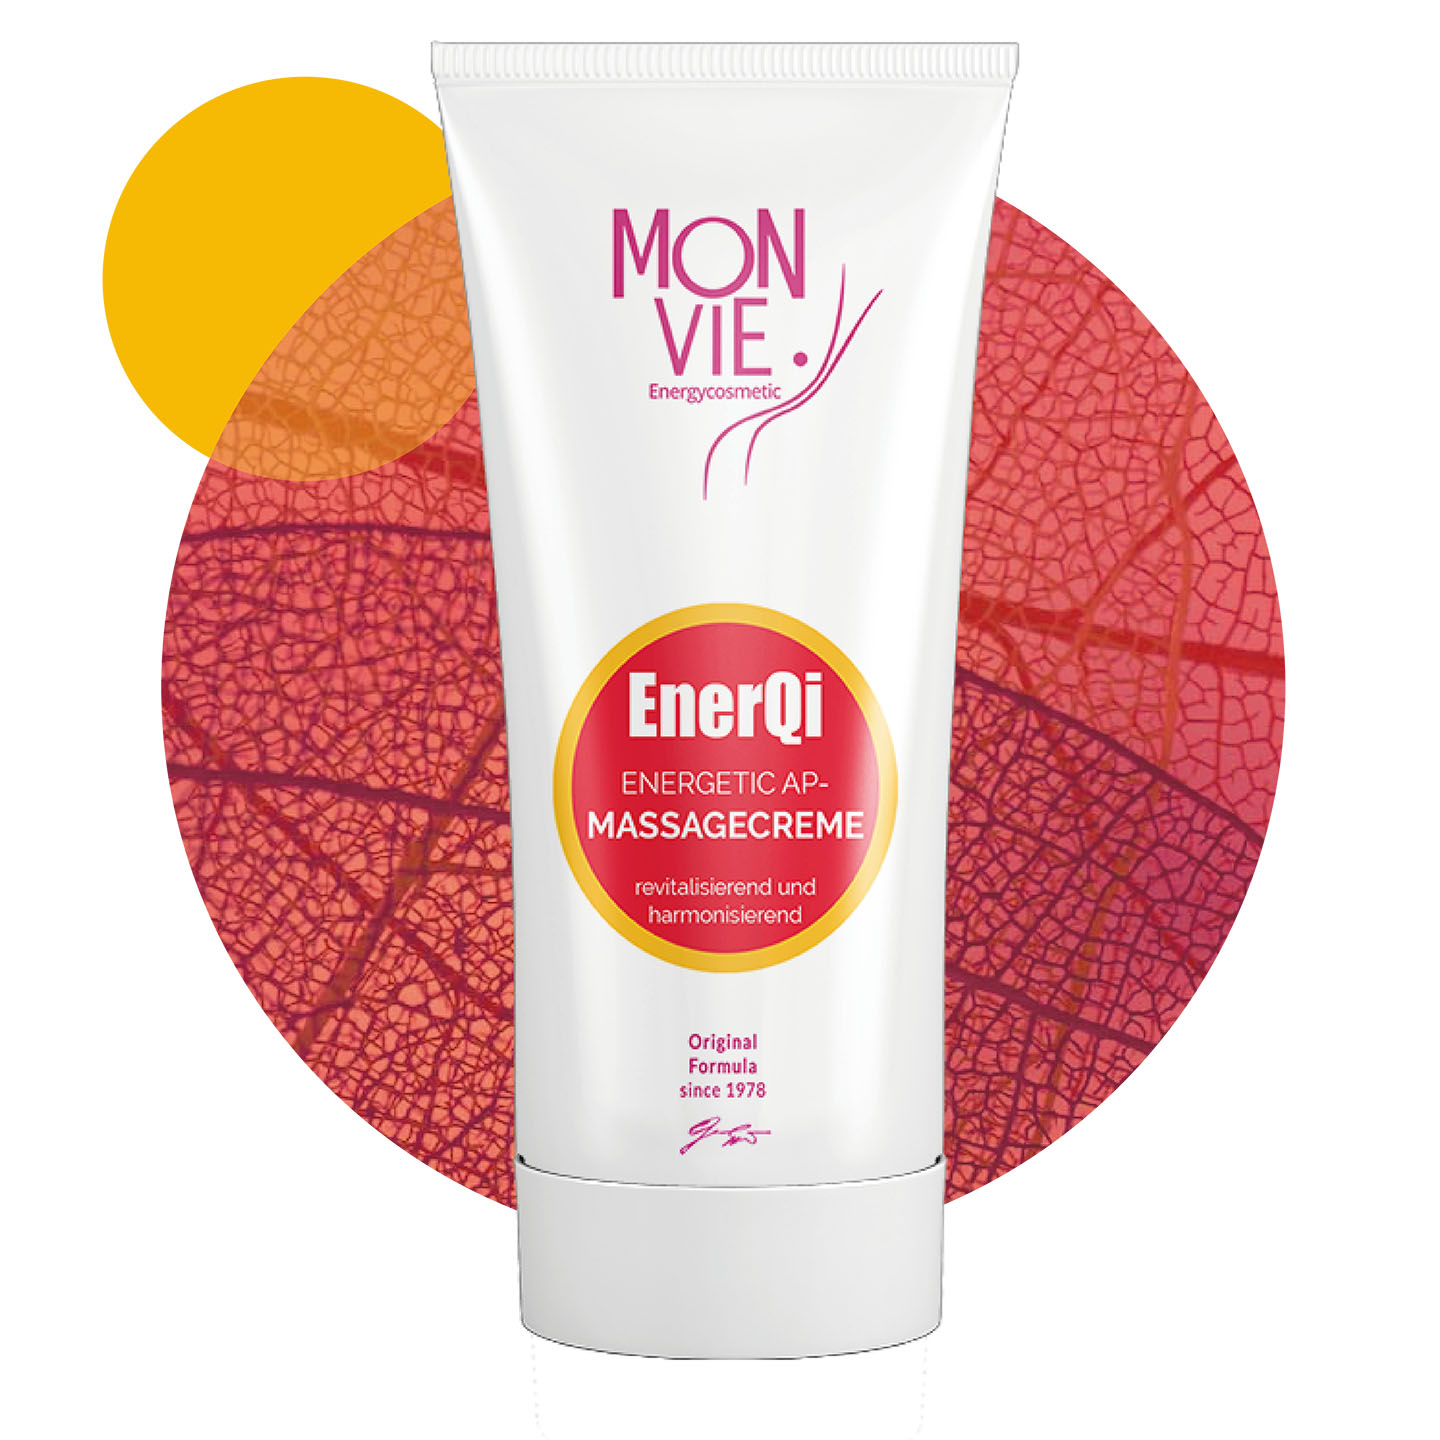 Monvie Energiekosmetik - EnerQi revitalisierend & harmonisierend energetic AP Massagecreme 100ml - Mockup mit Kreis und Blättern